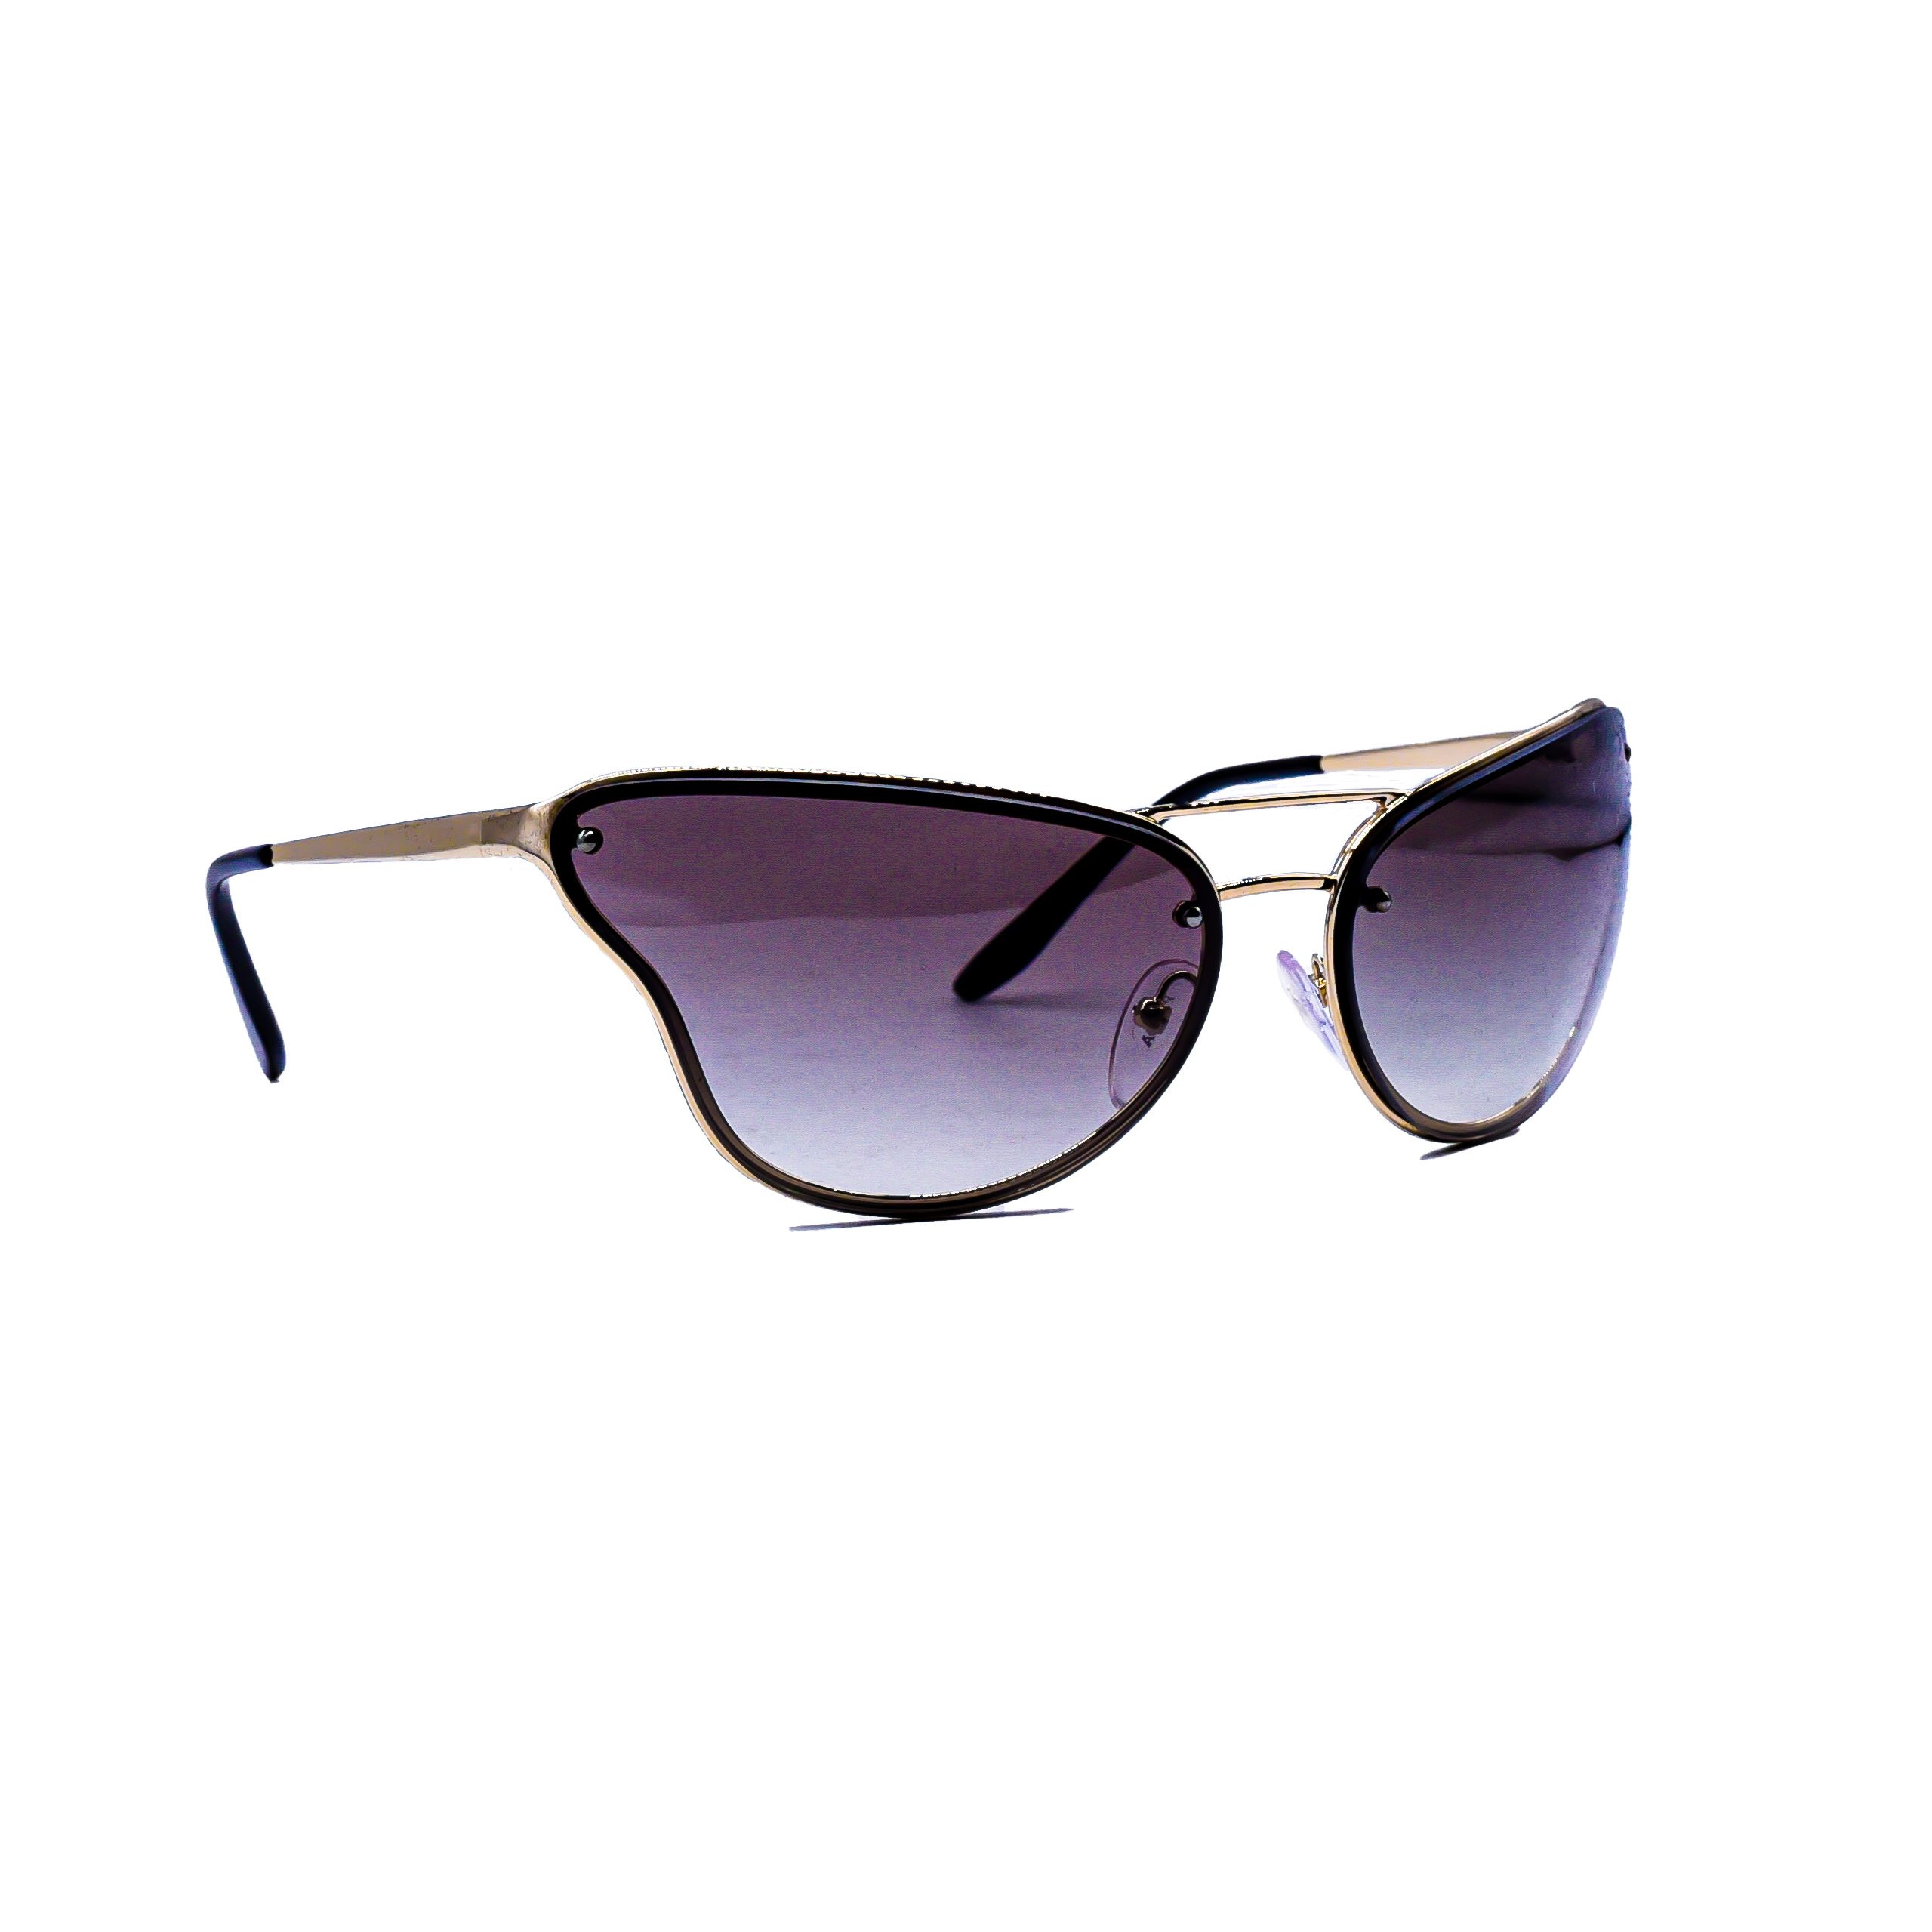 Prada Women's Semi-Rimless Sunglasses - image 2 of 2